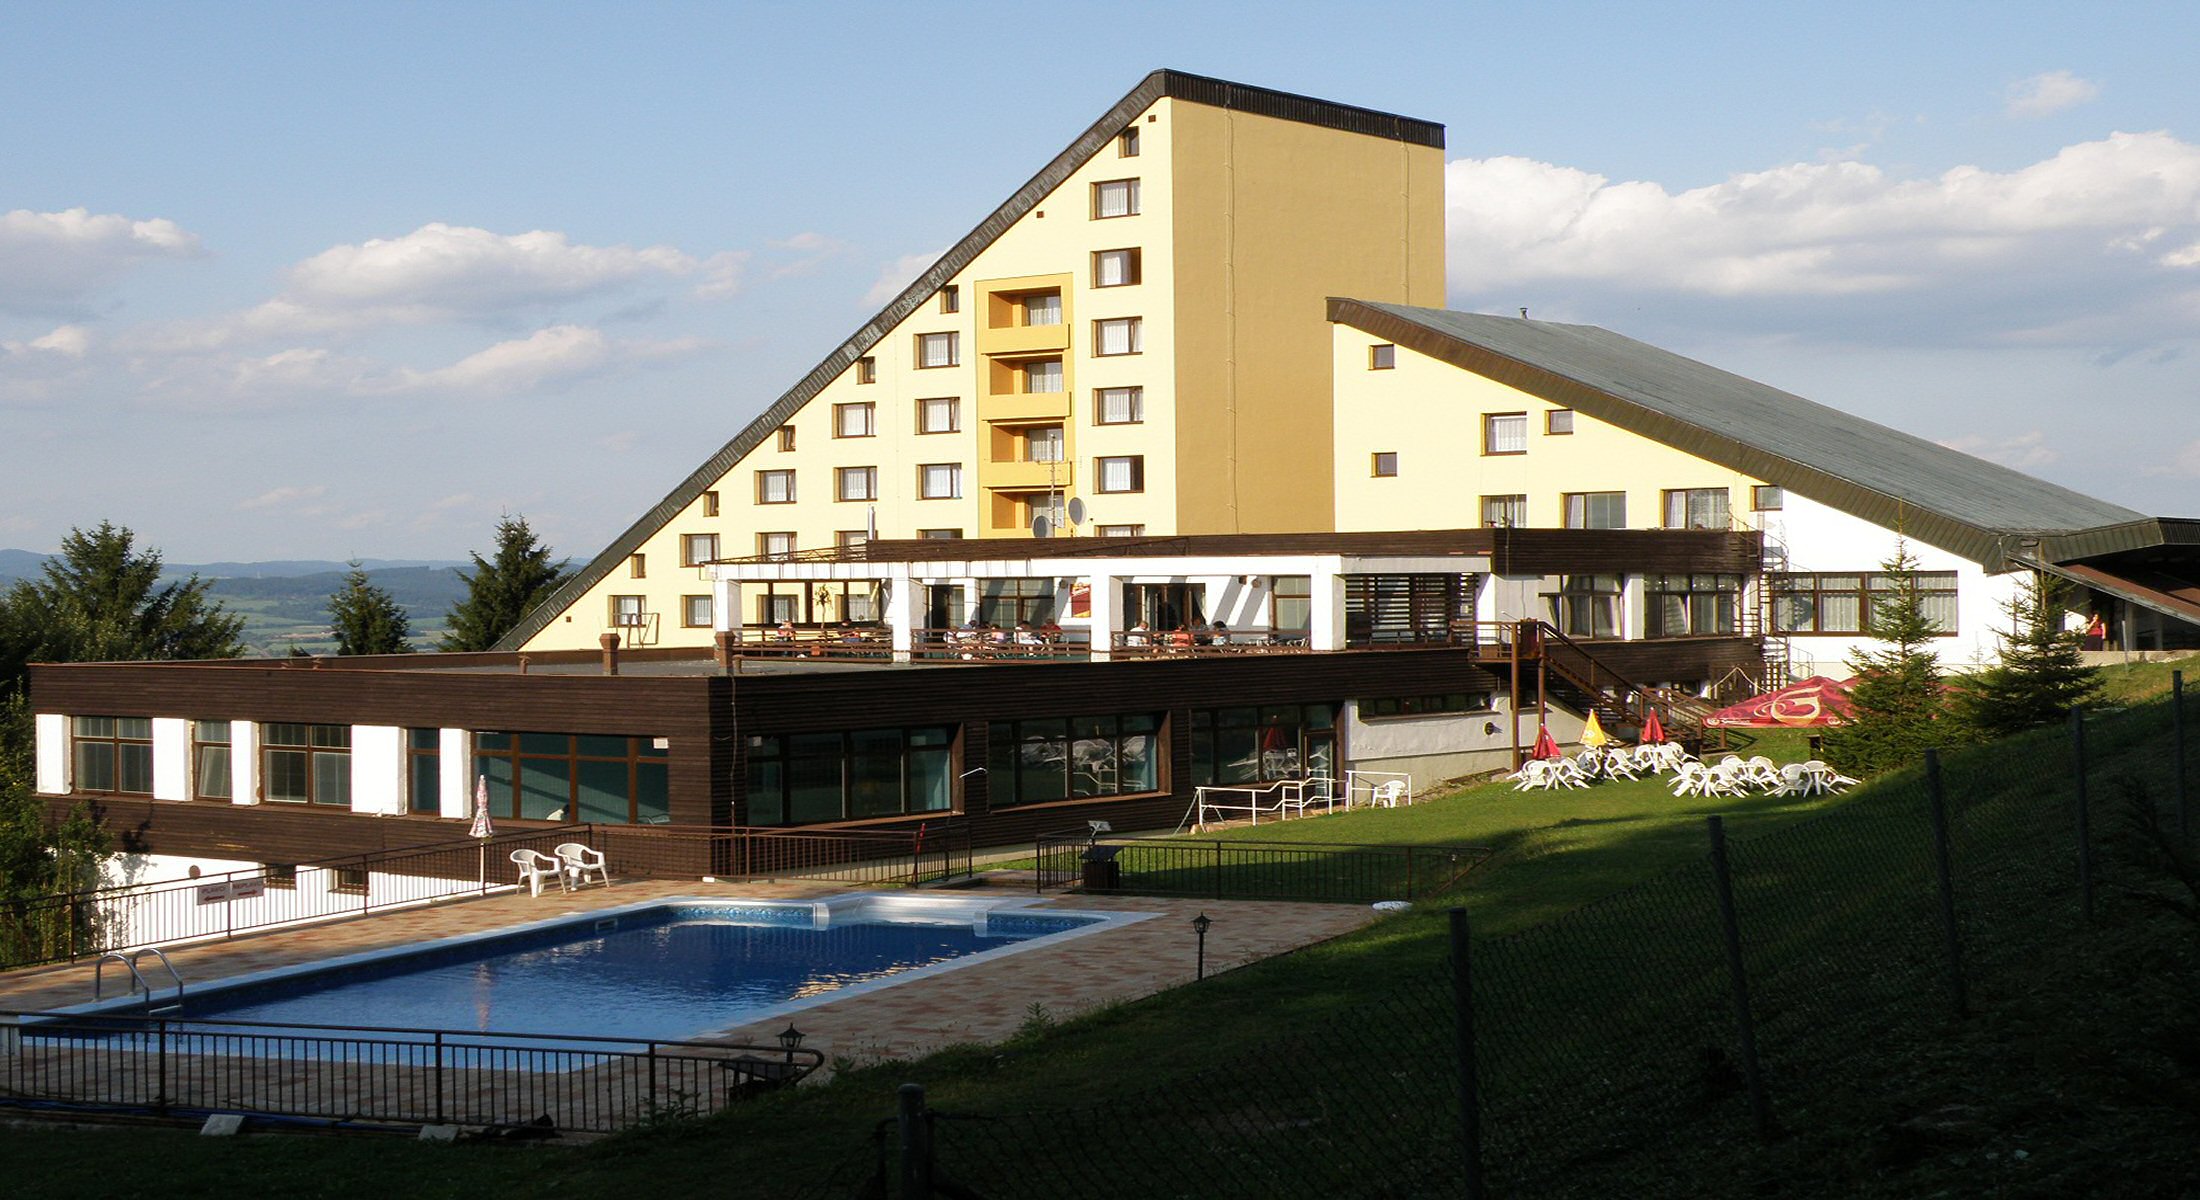 Hotel Jelenovsk photo 1 - full size